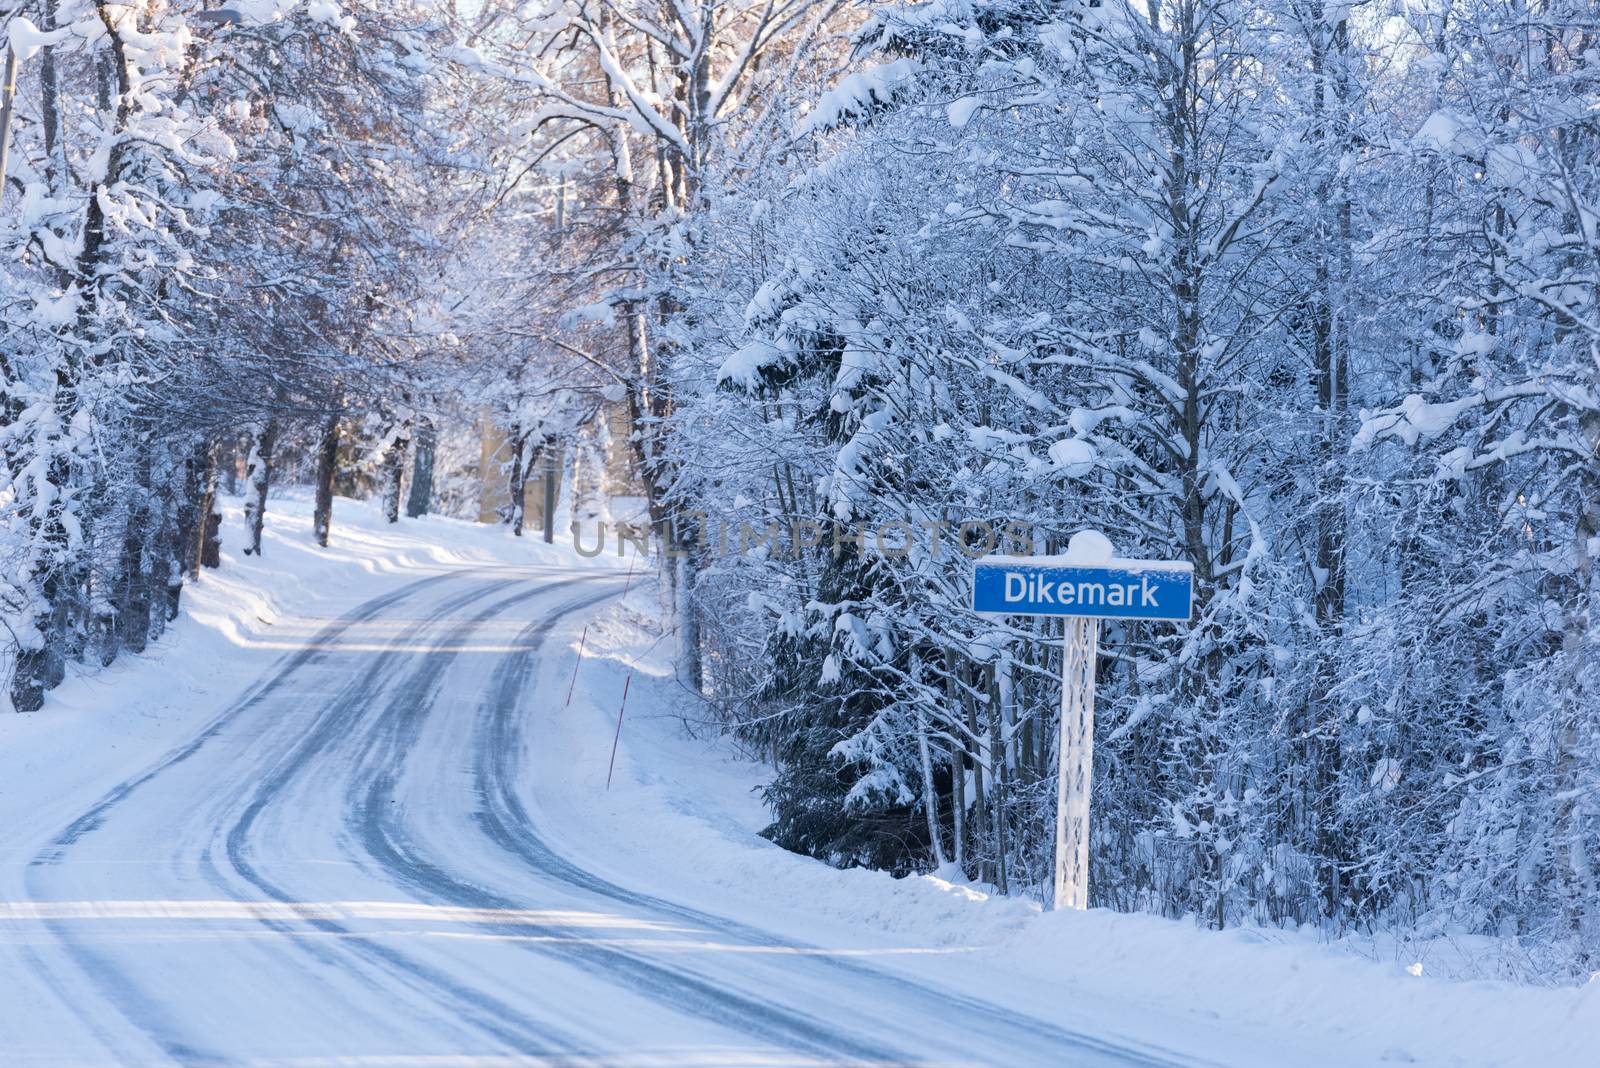 Dikemark road sign on winter road